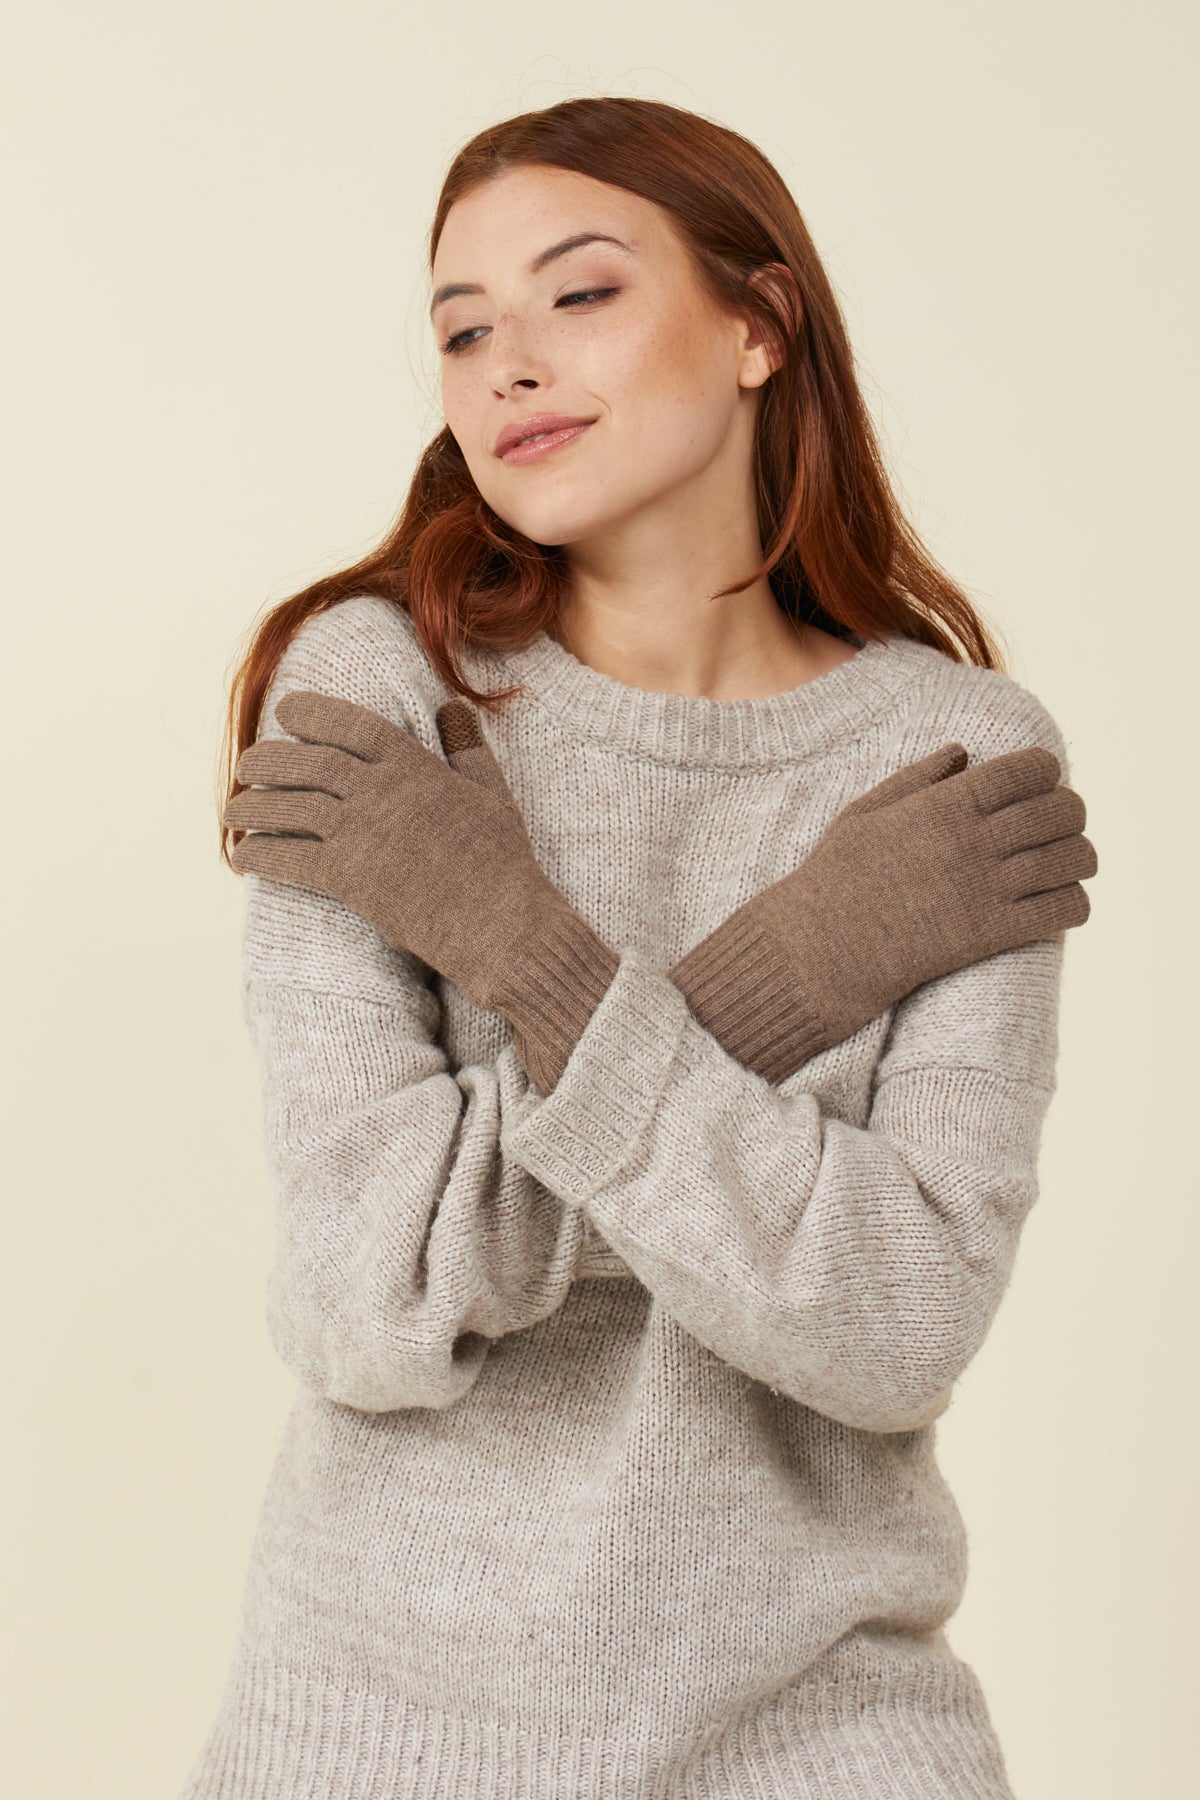 Newly Redesigned Self-Heating Gloves in Merino Wool